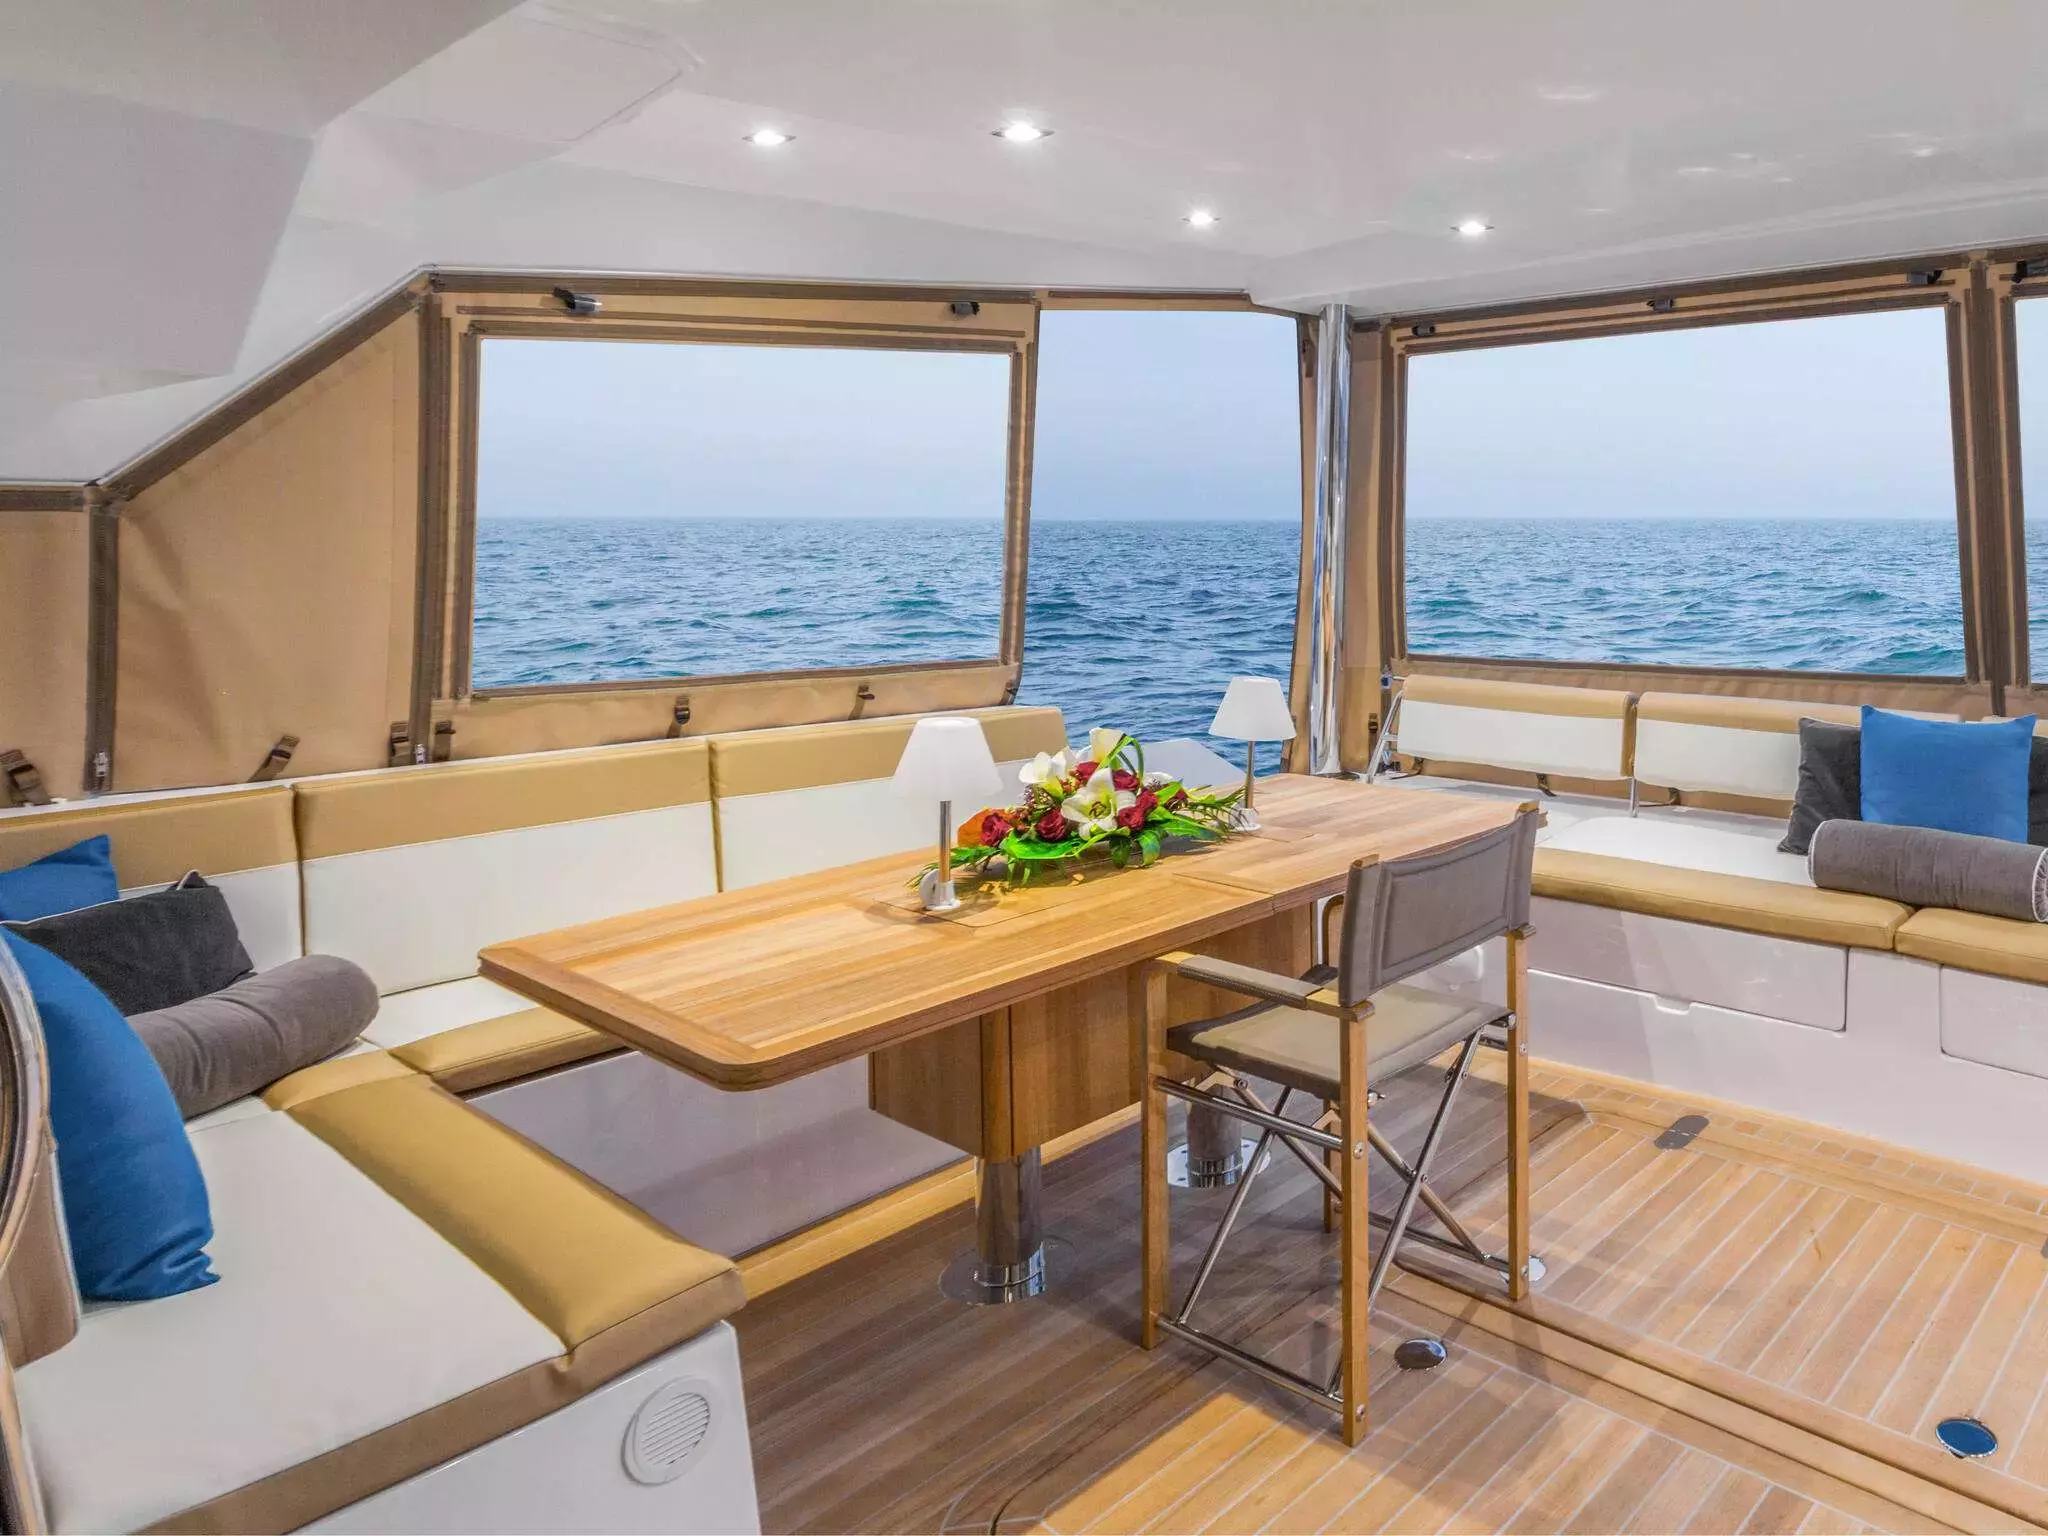 Segundo Viento by Privilege - Top rates for a Rental of a private Sailing Catamaran in British Virgin Islands